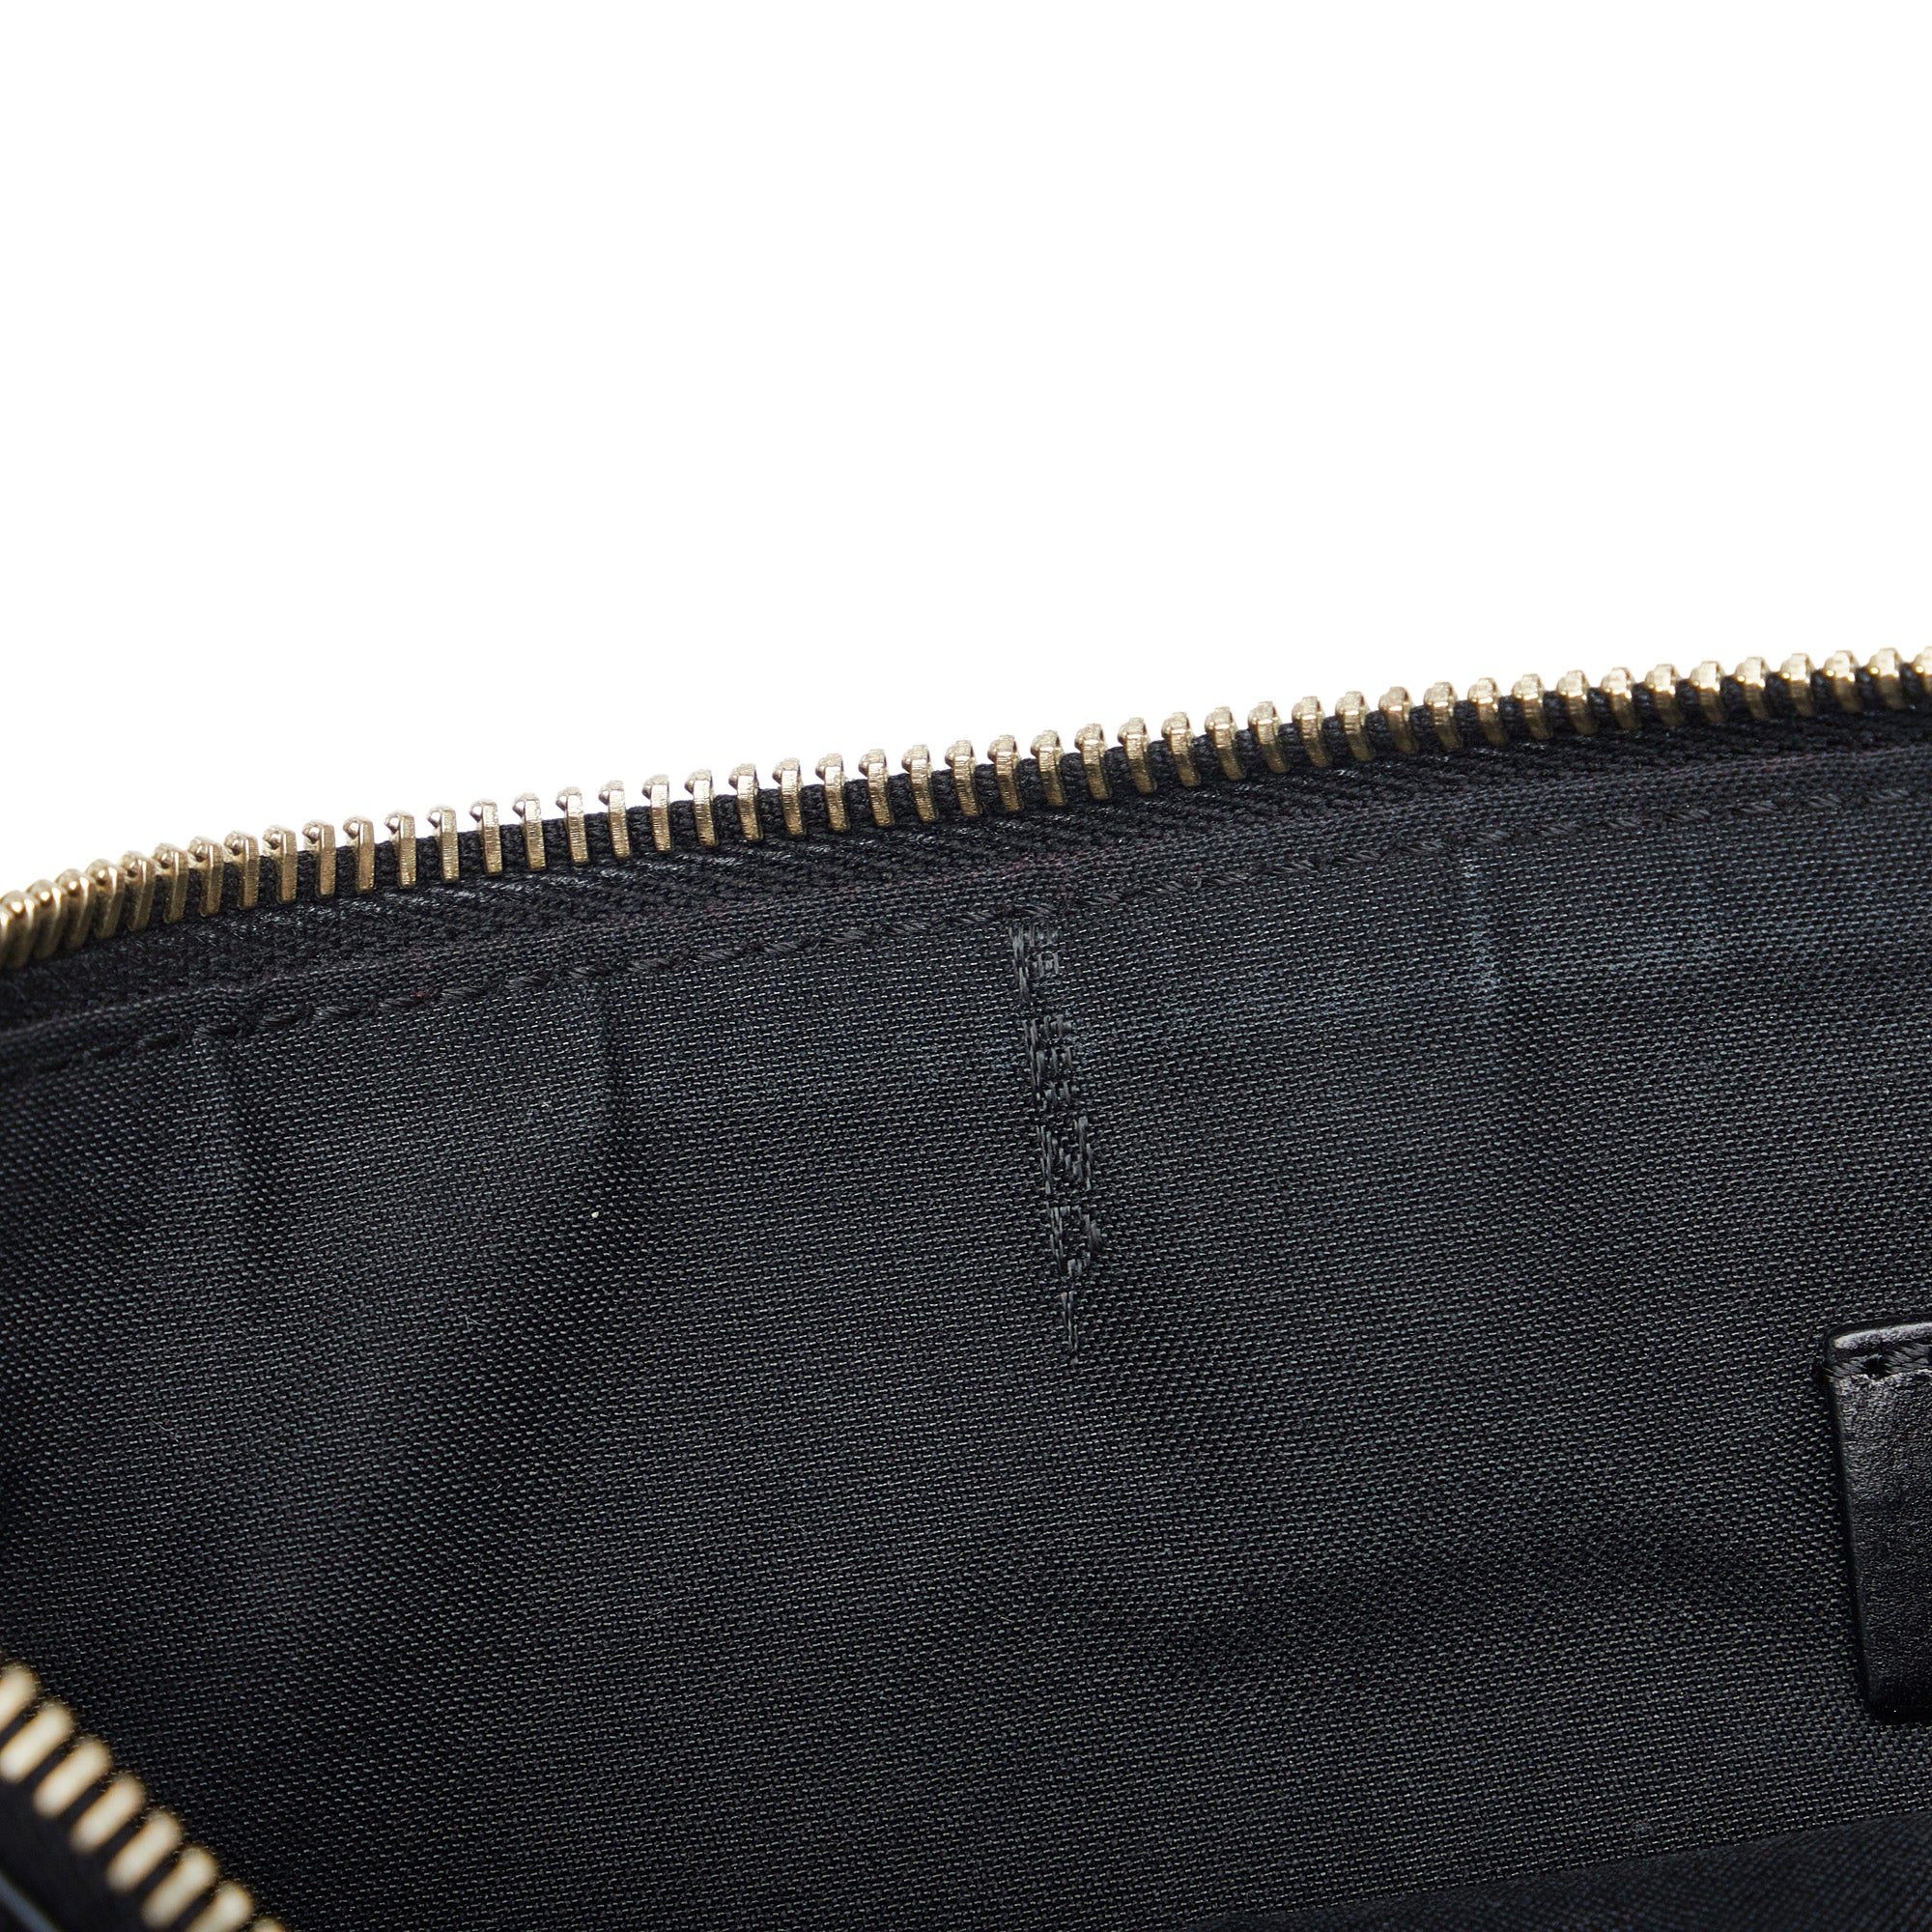 Authentic FENDI Monster Black Leather Zip Clutch Pouch Bag